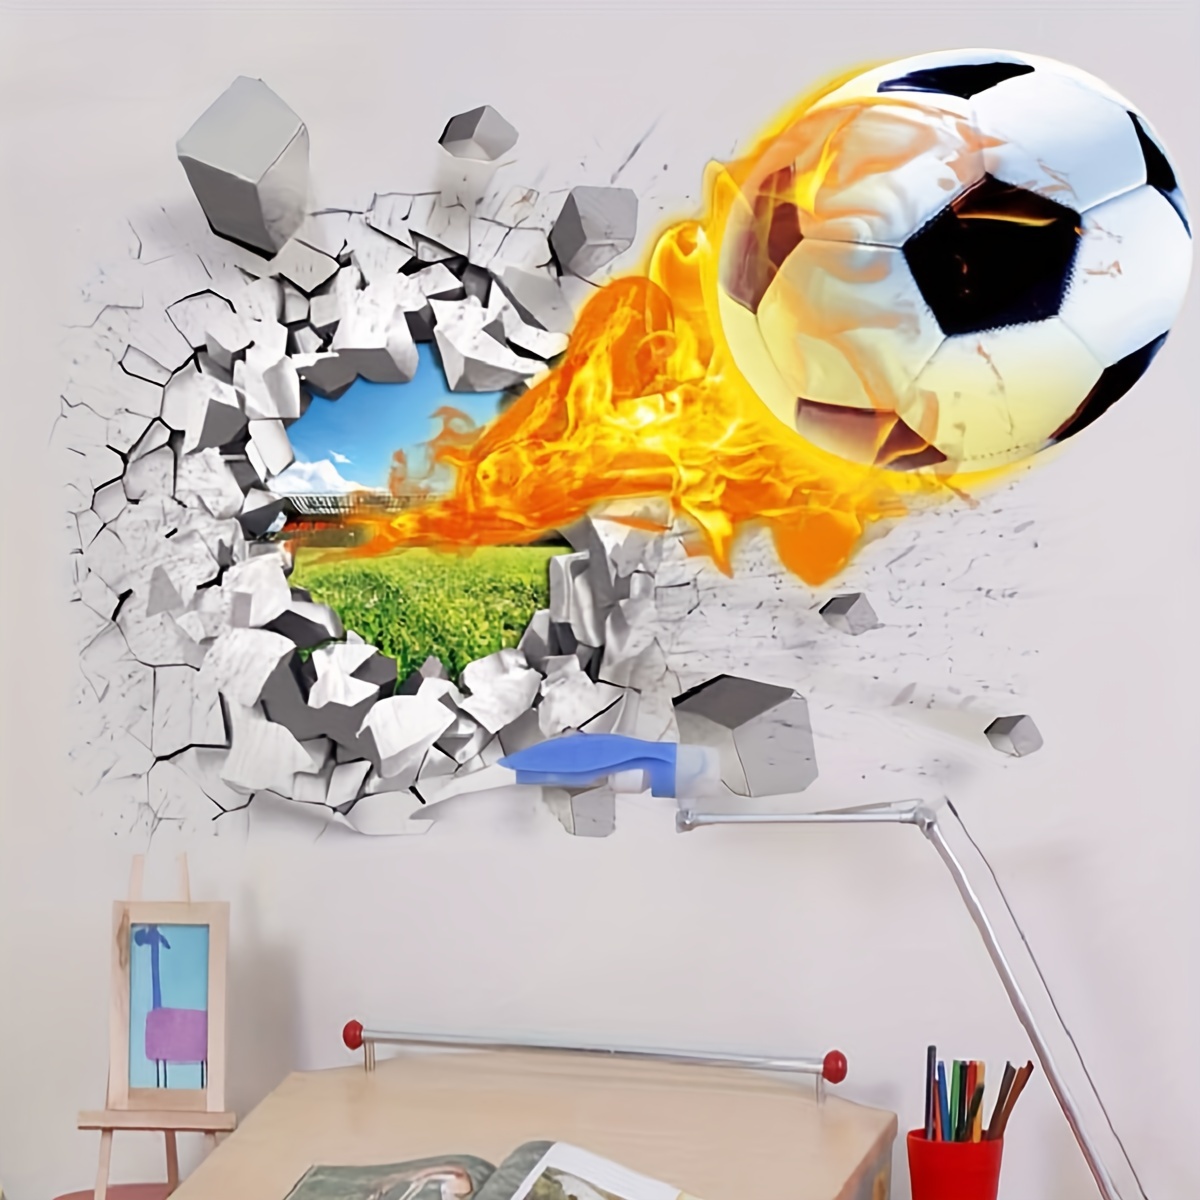  Football Vinyl Wall Decal - Customizable Home or